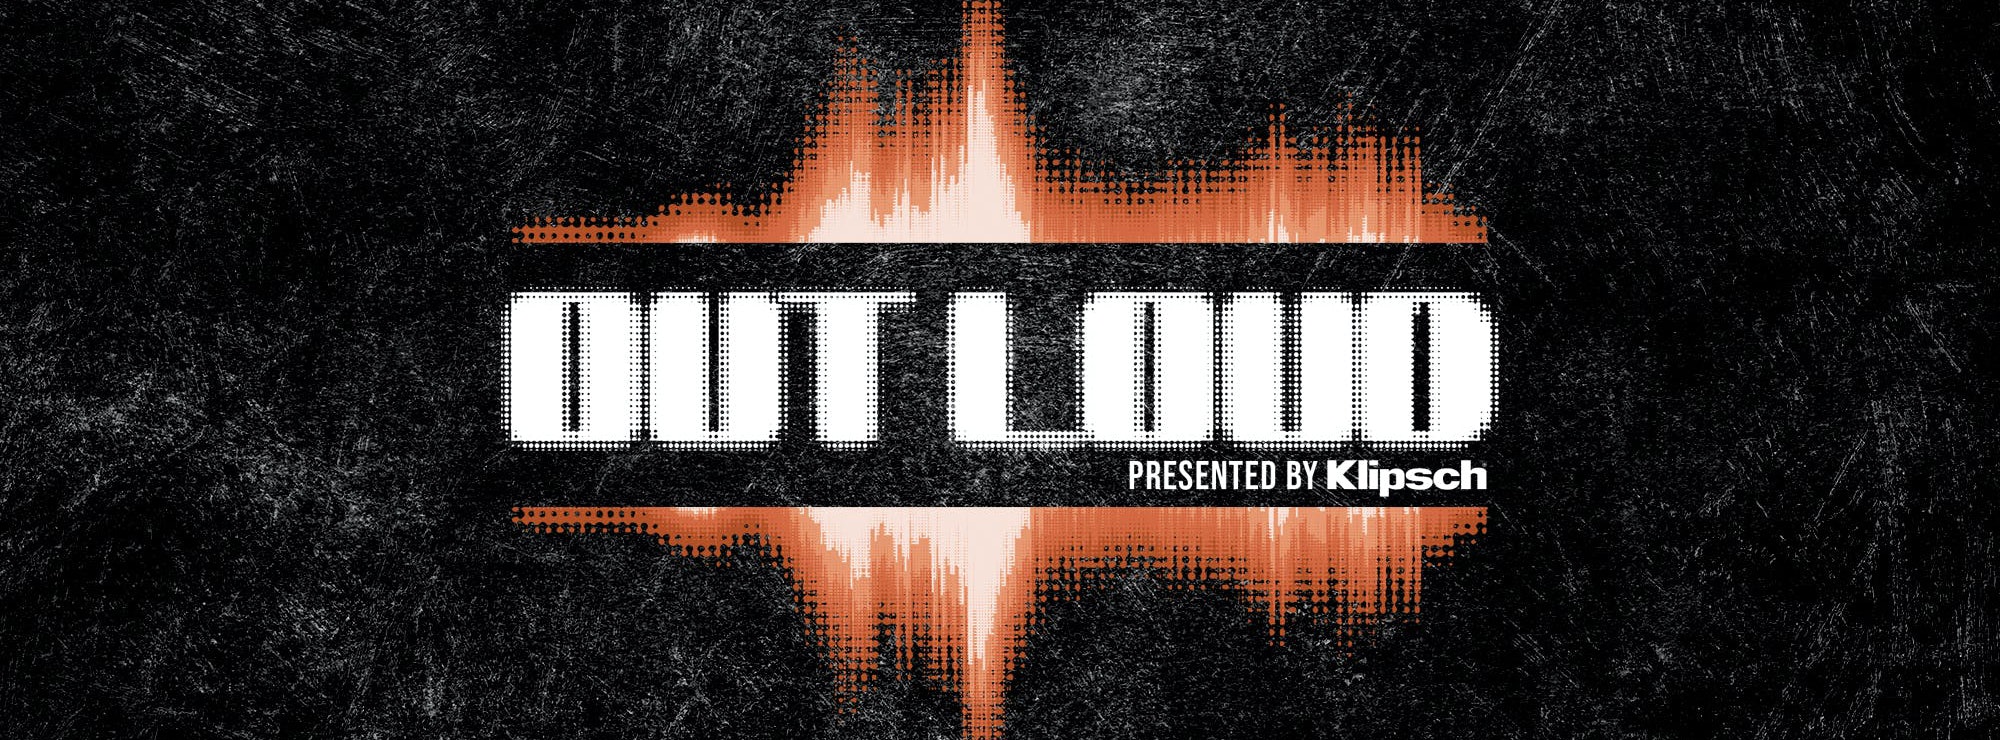 Klipsch out loud music streaming series logo